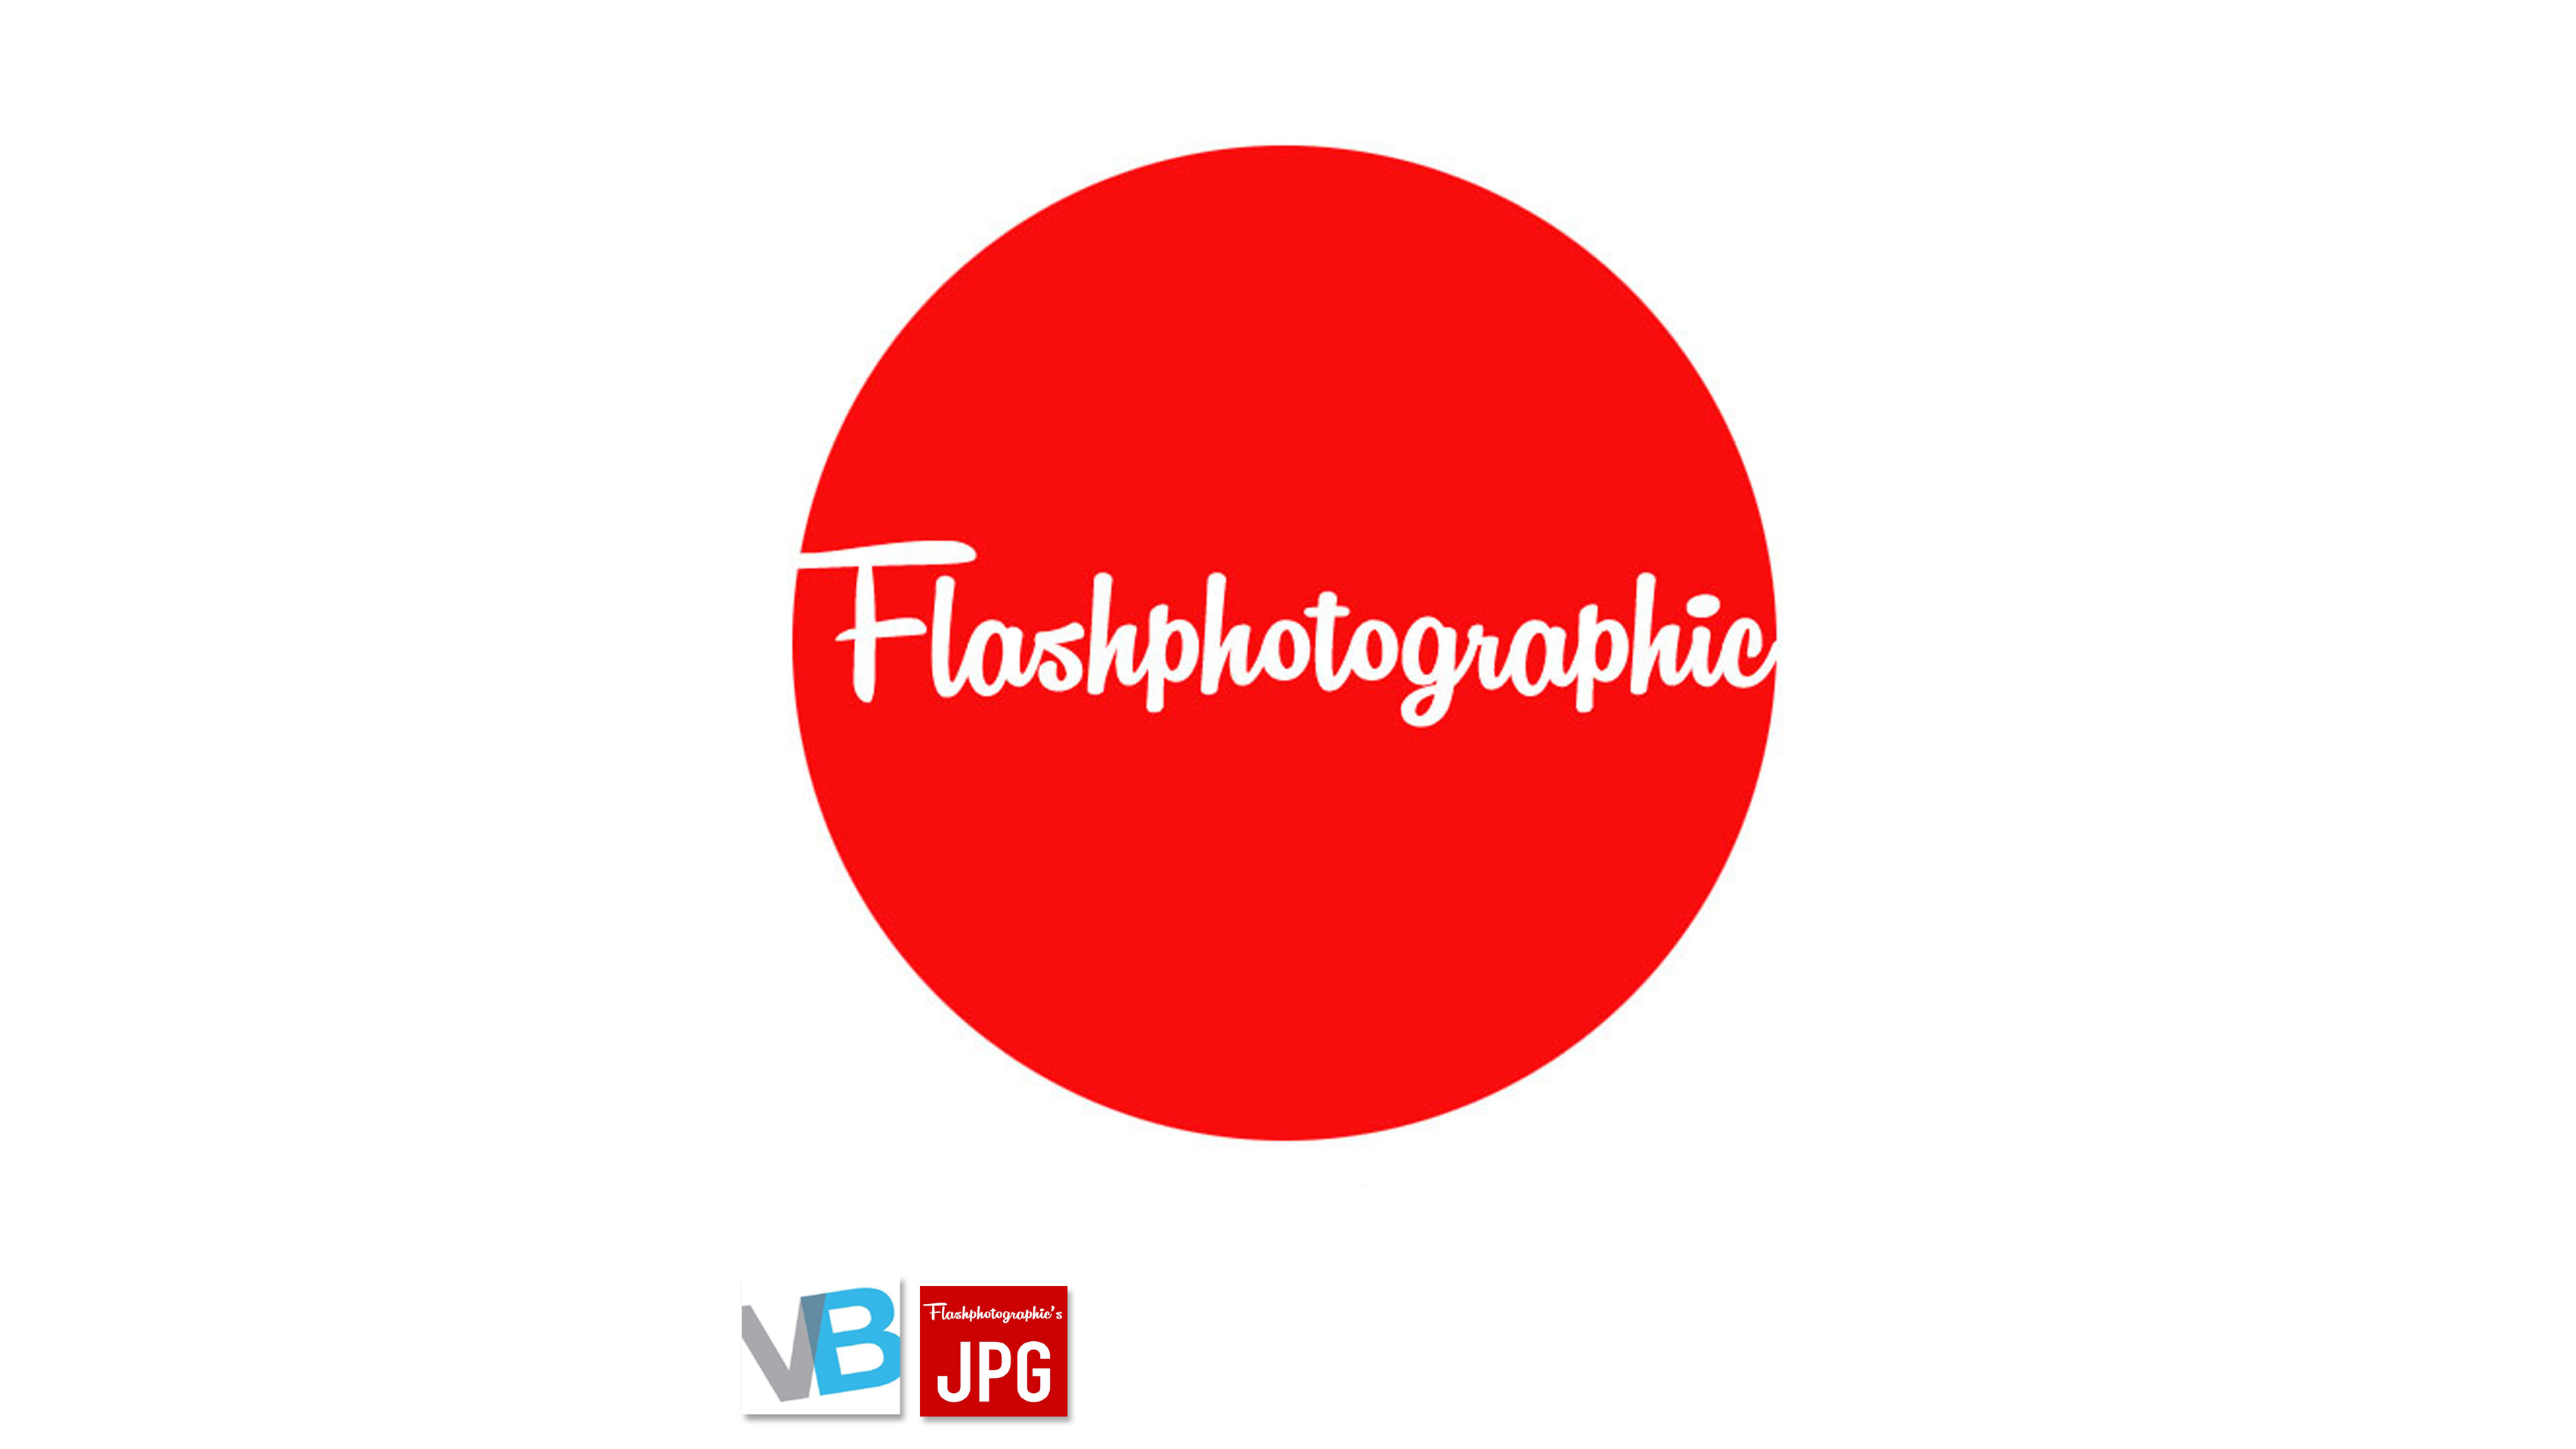 www.flashphotographic.com